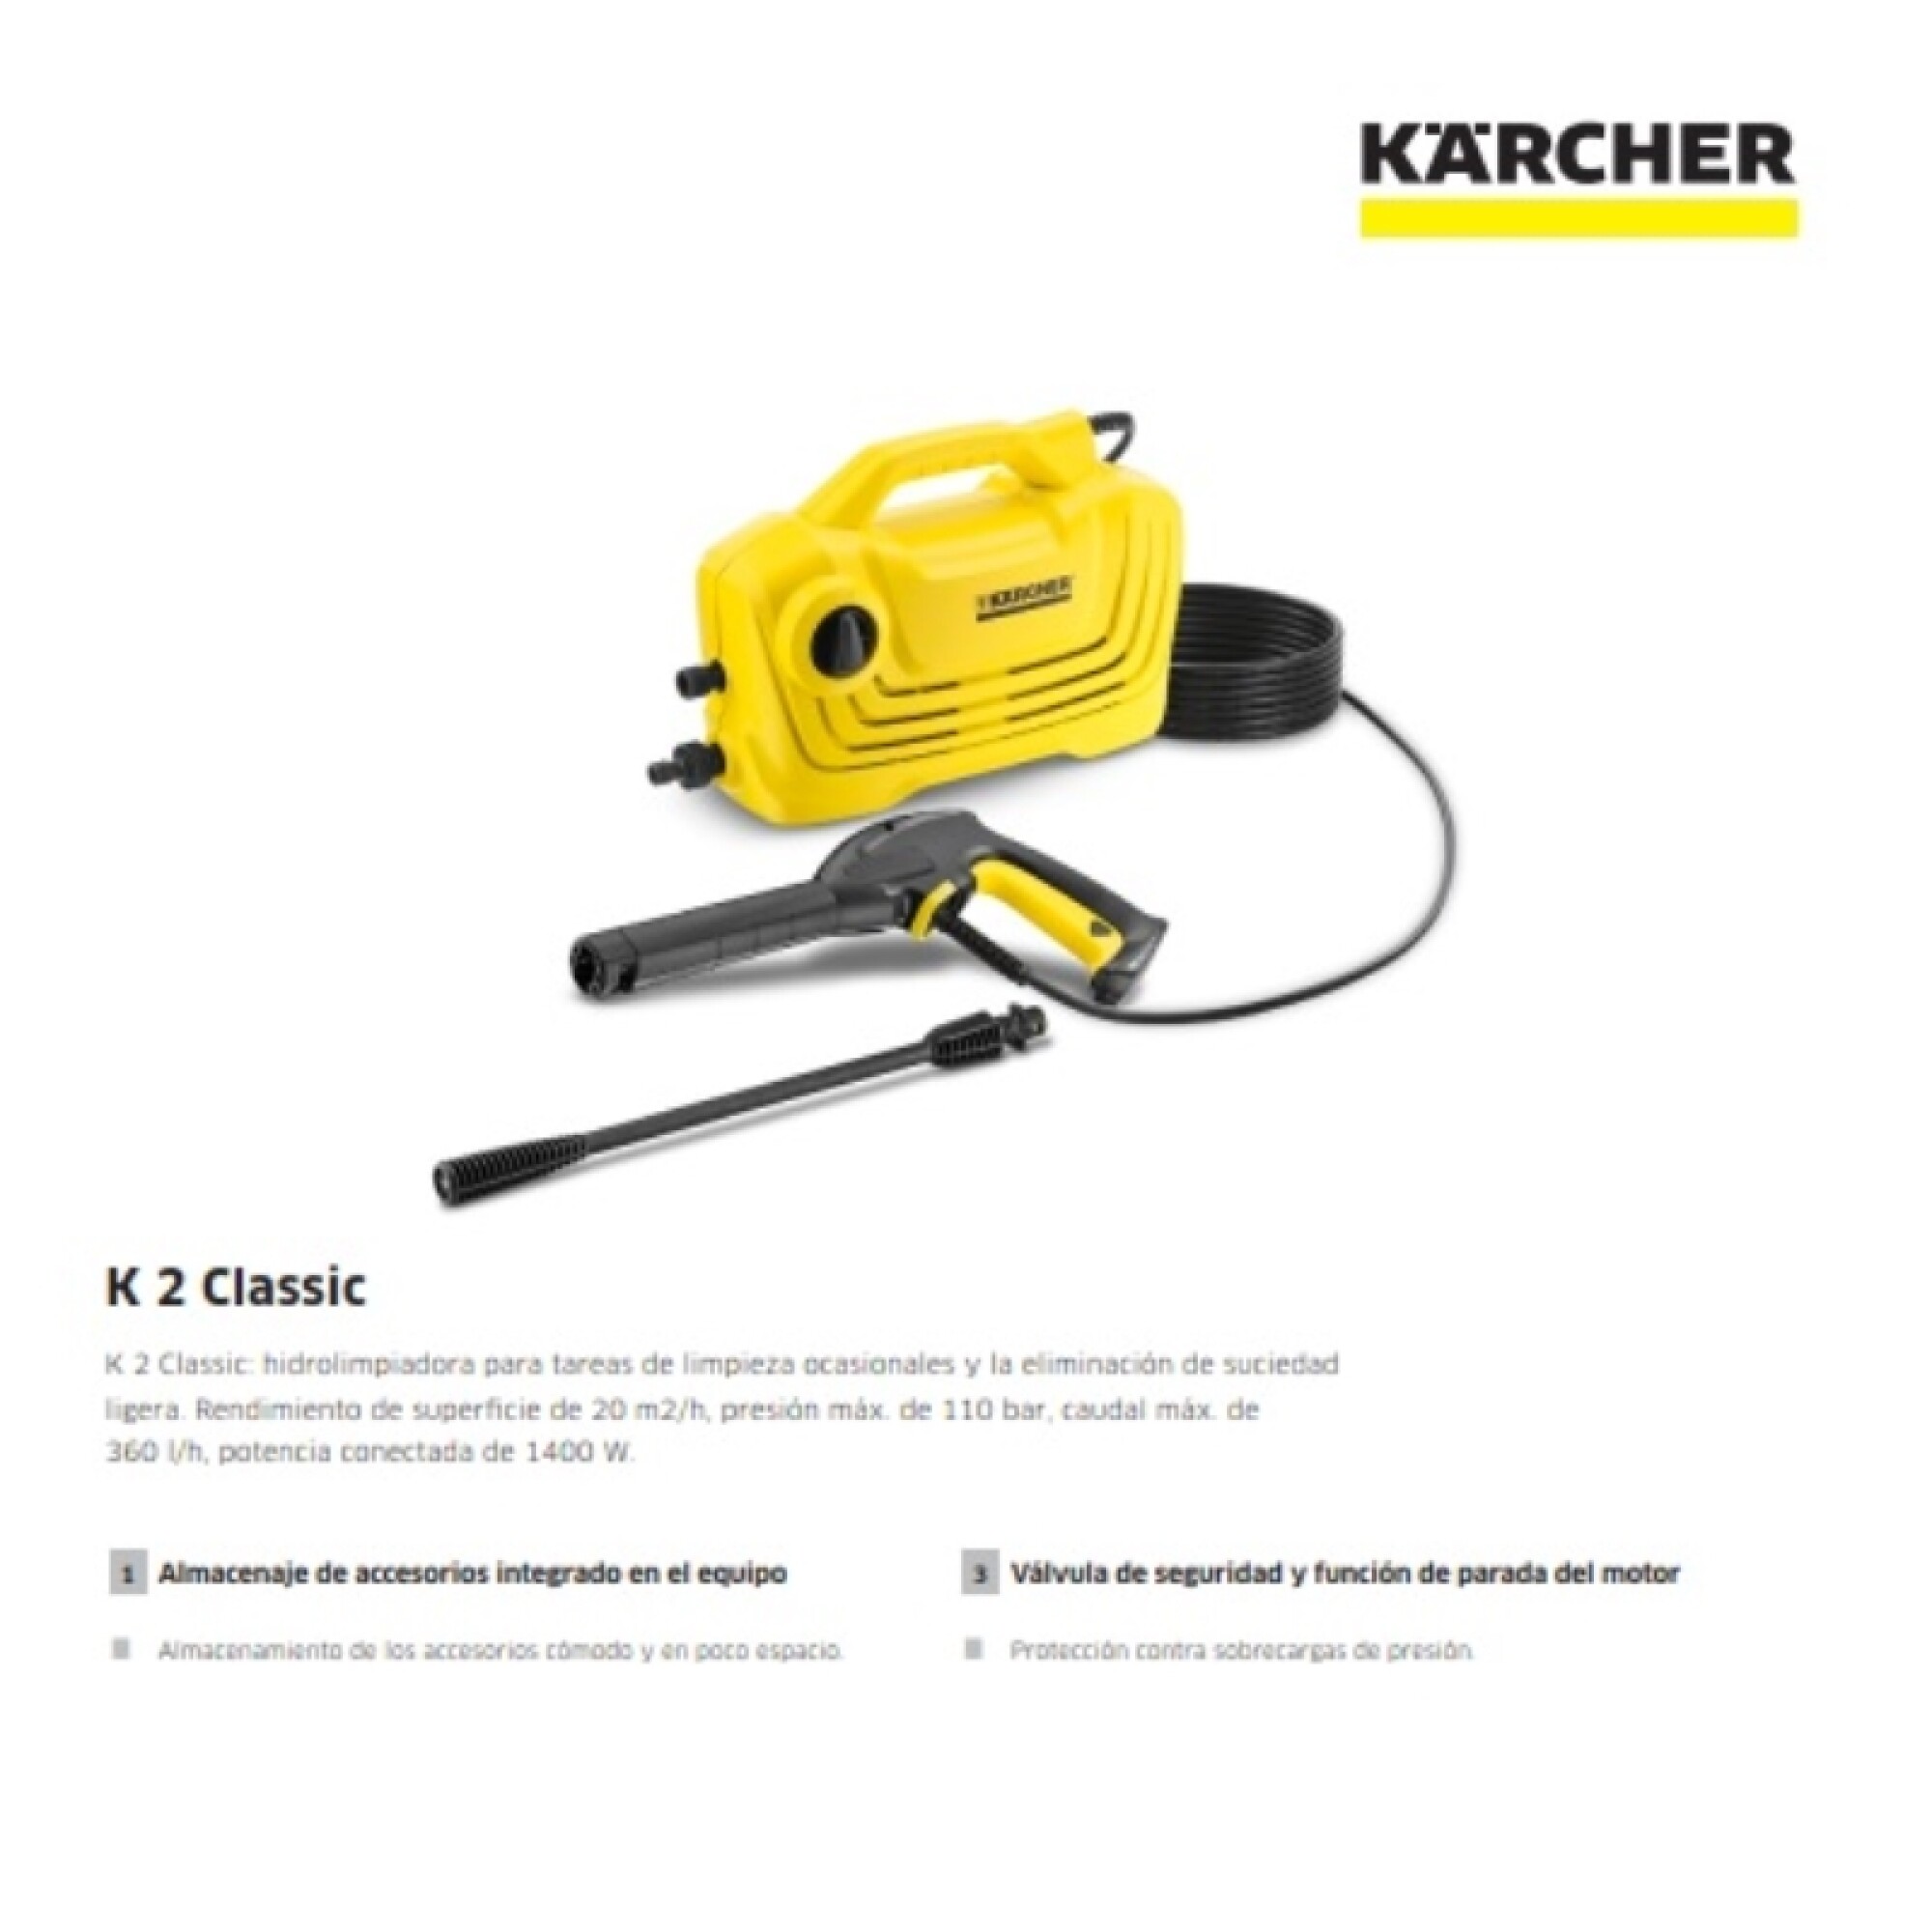 Karcher K 2 Power Control Home Kit Hidrolimpiadora 1400W + Accesorios